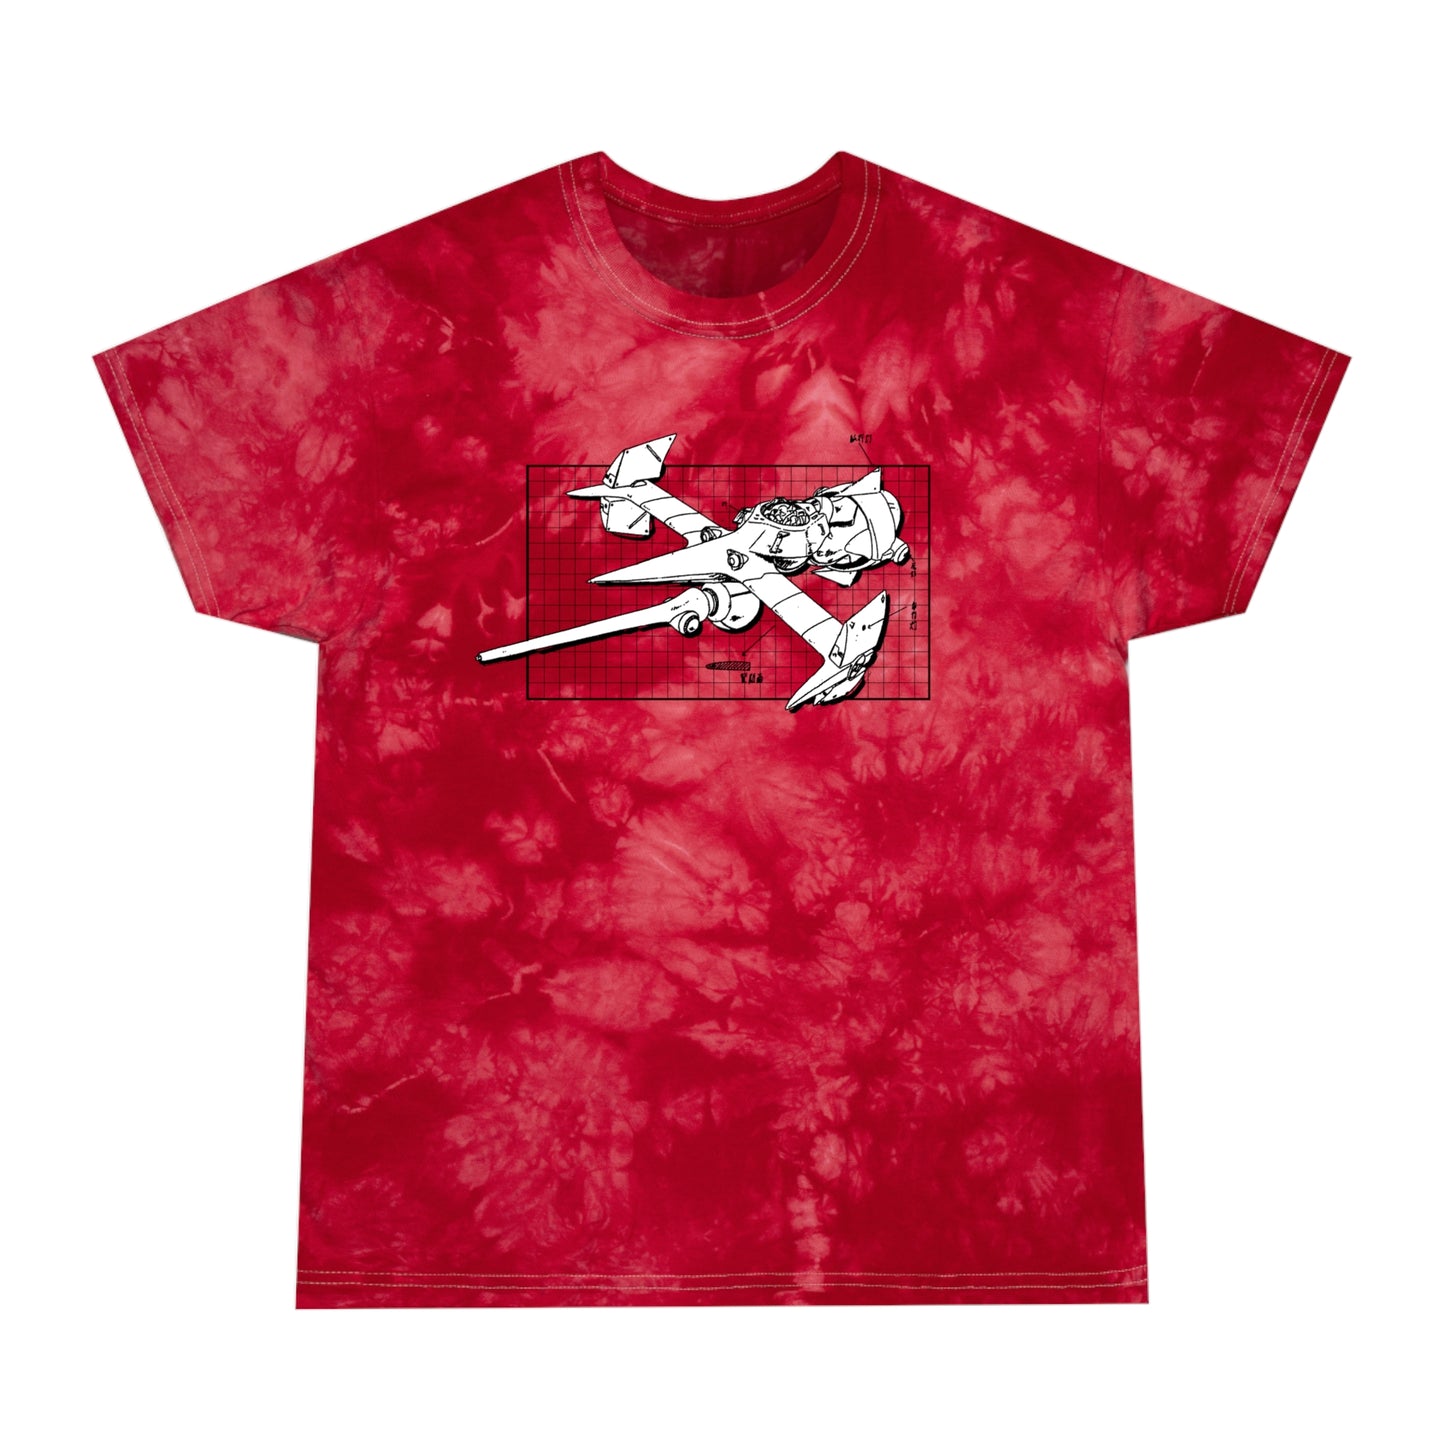 Swordfish II tie-dye t-shirt